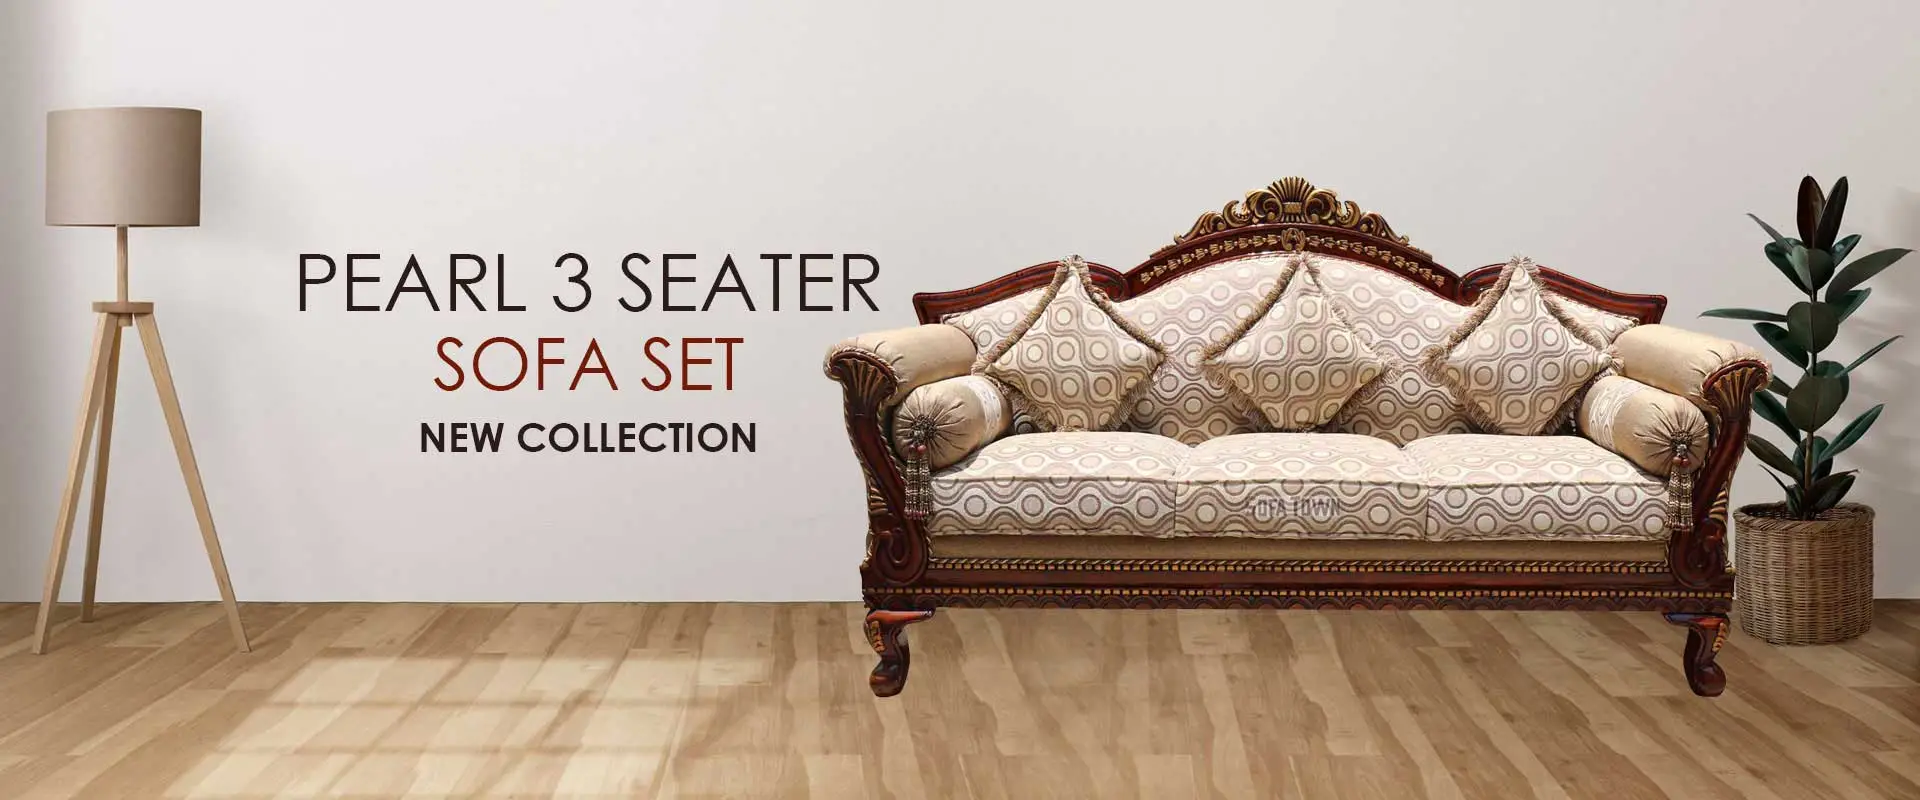 Pearl 3 Seater Sofa Setin Delhi